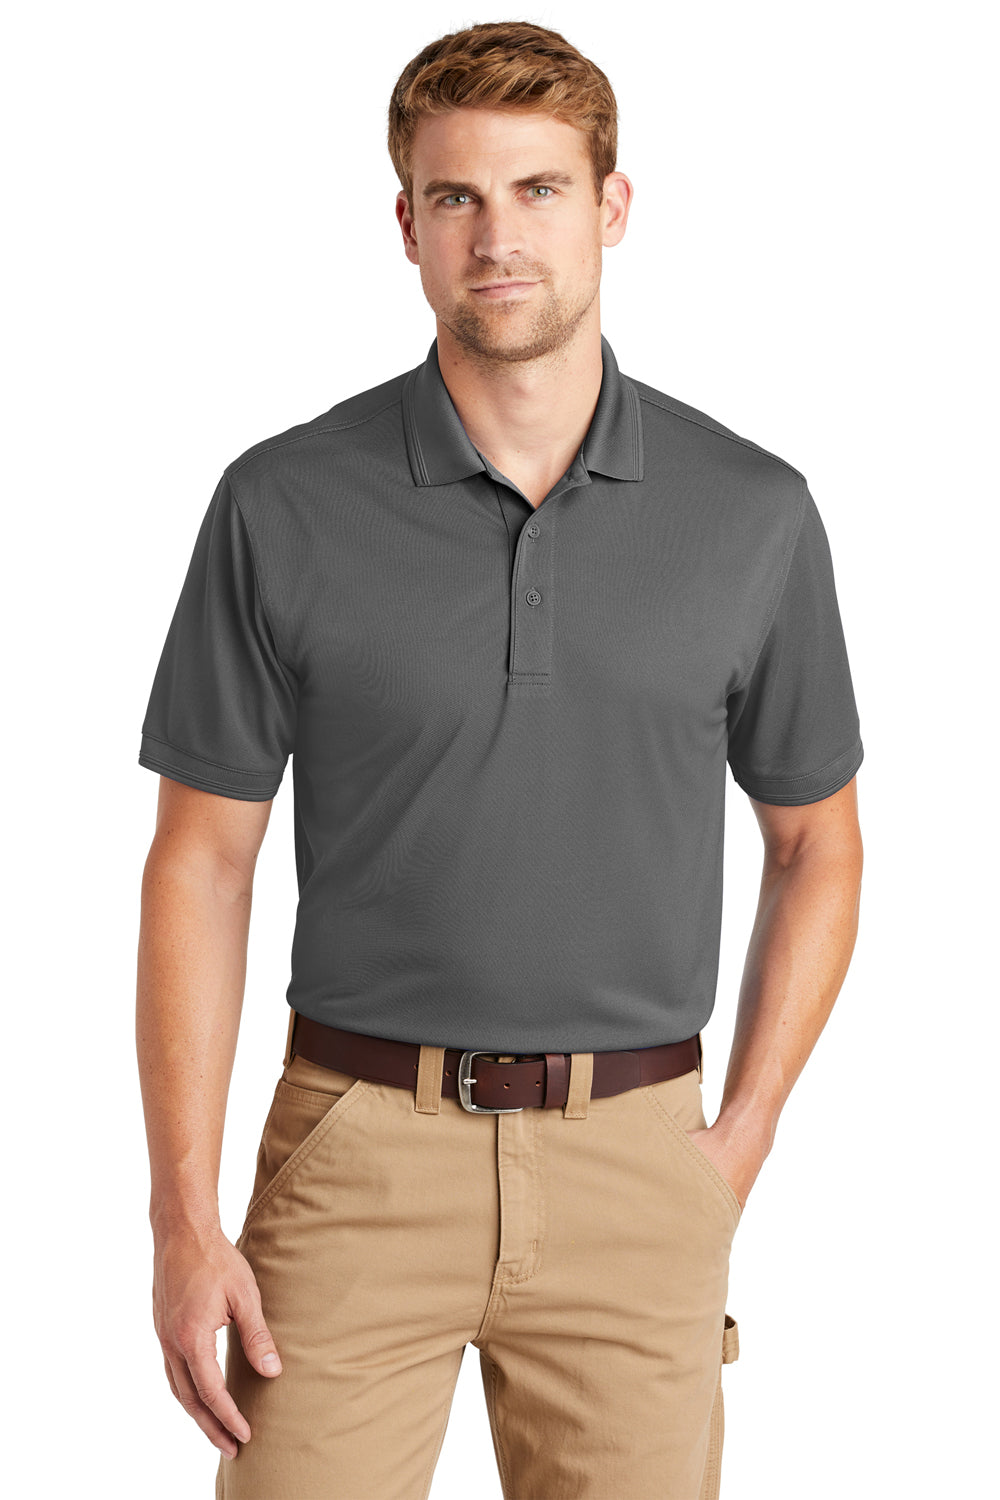 porselein twintig douche CornerStone CS4020 Mens Charcoal Grey Industrial Moisture Wicking Short  Sleeve Polo Shirt — BigTopShirtShop.com